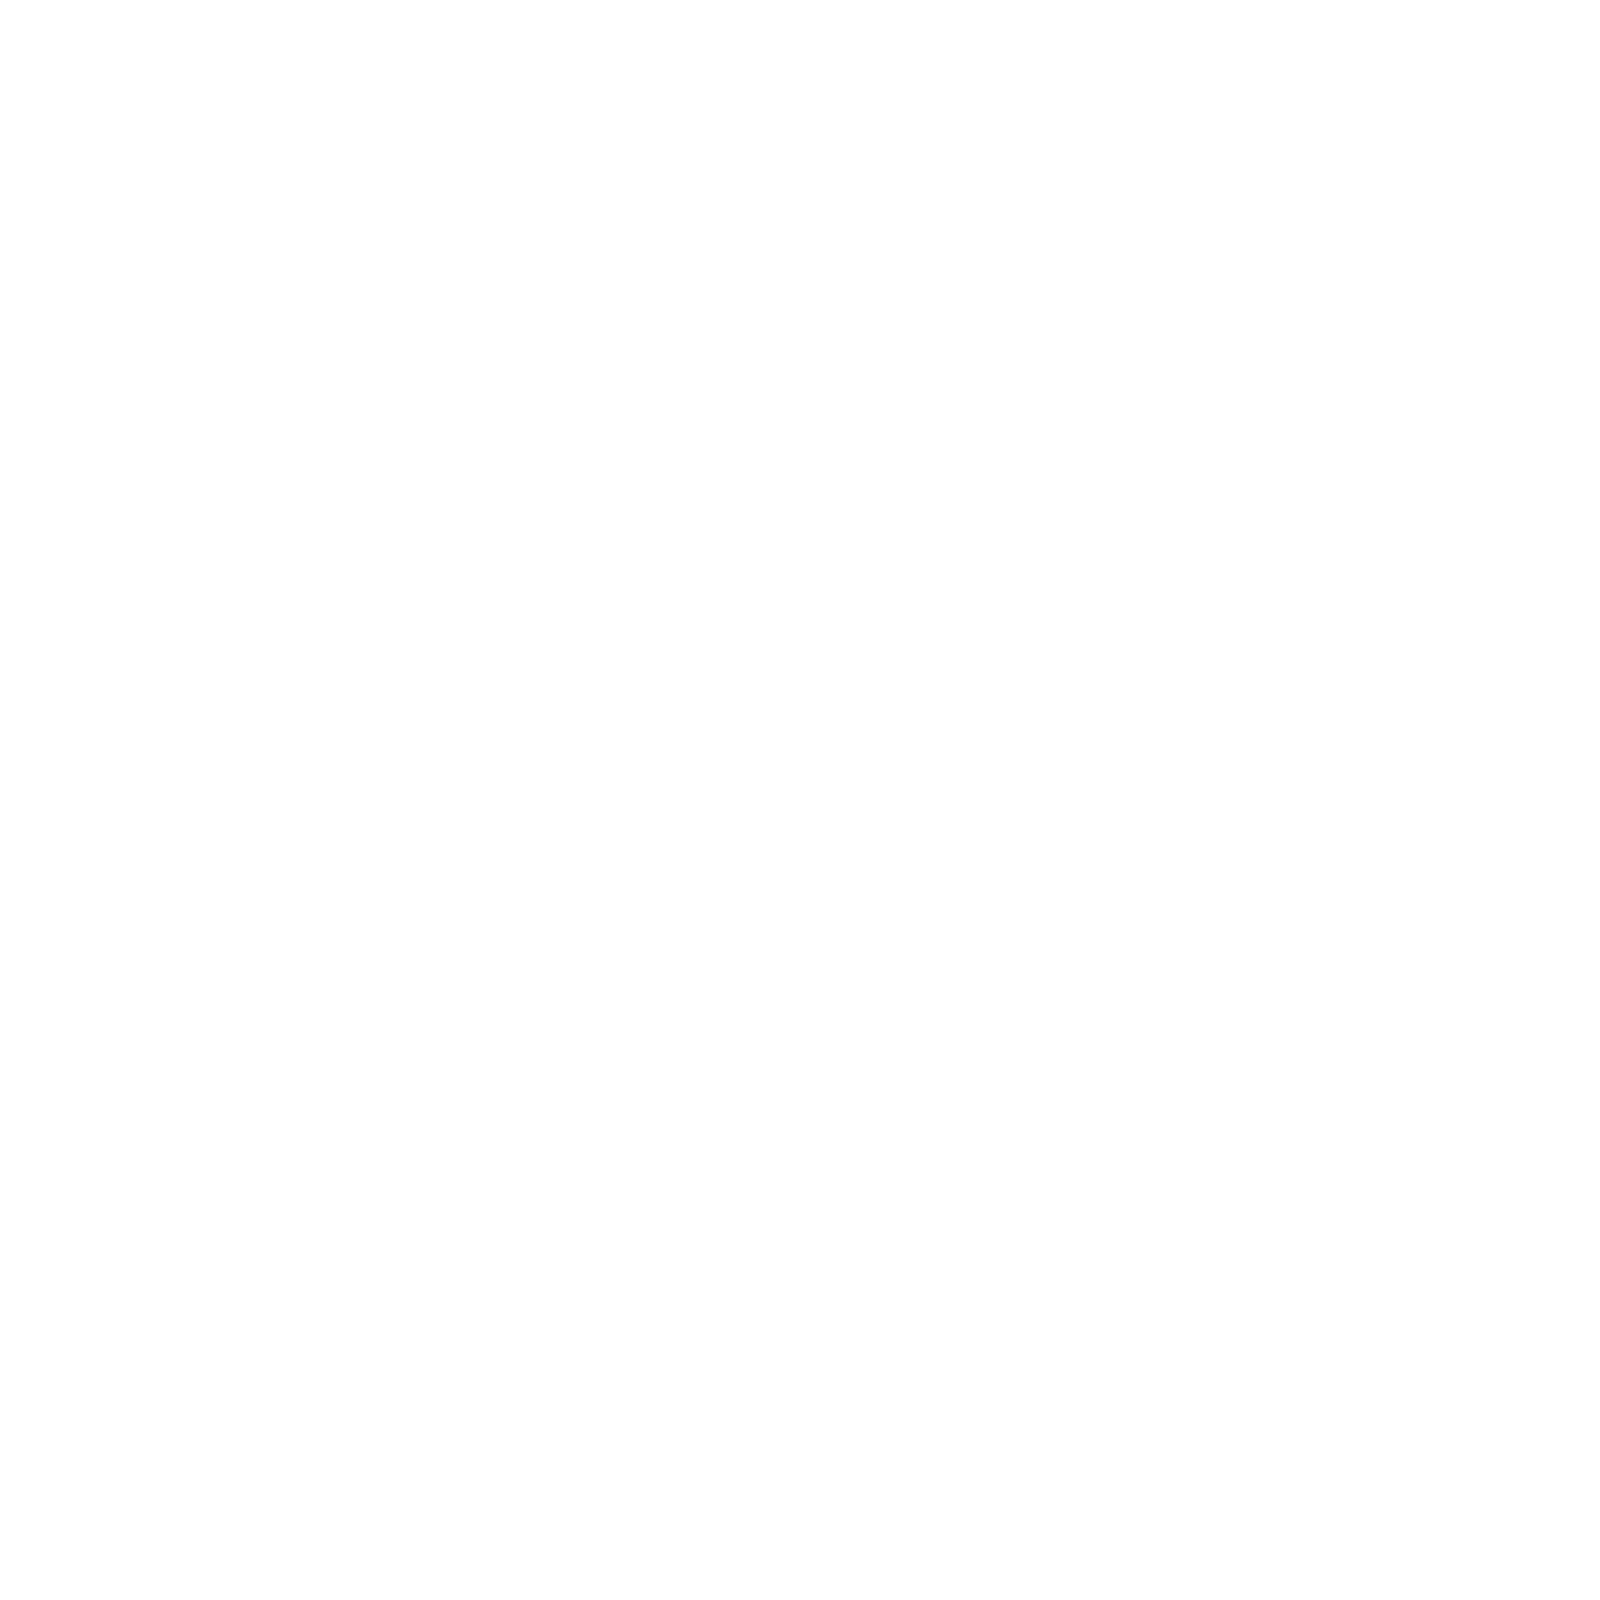 Arton Business